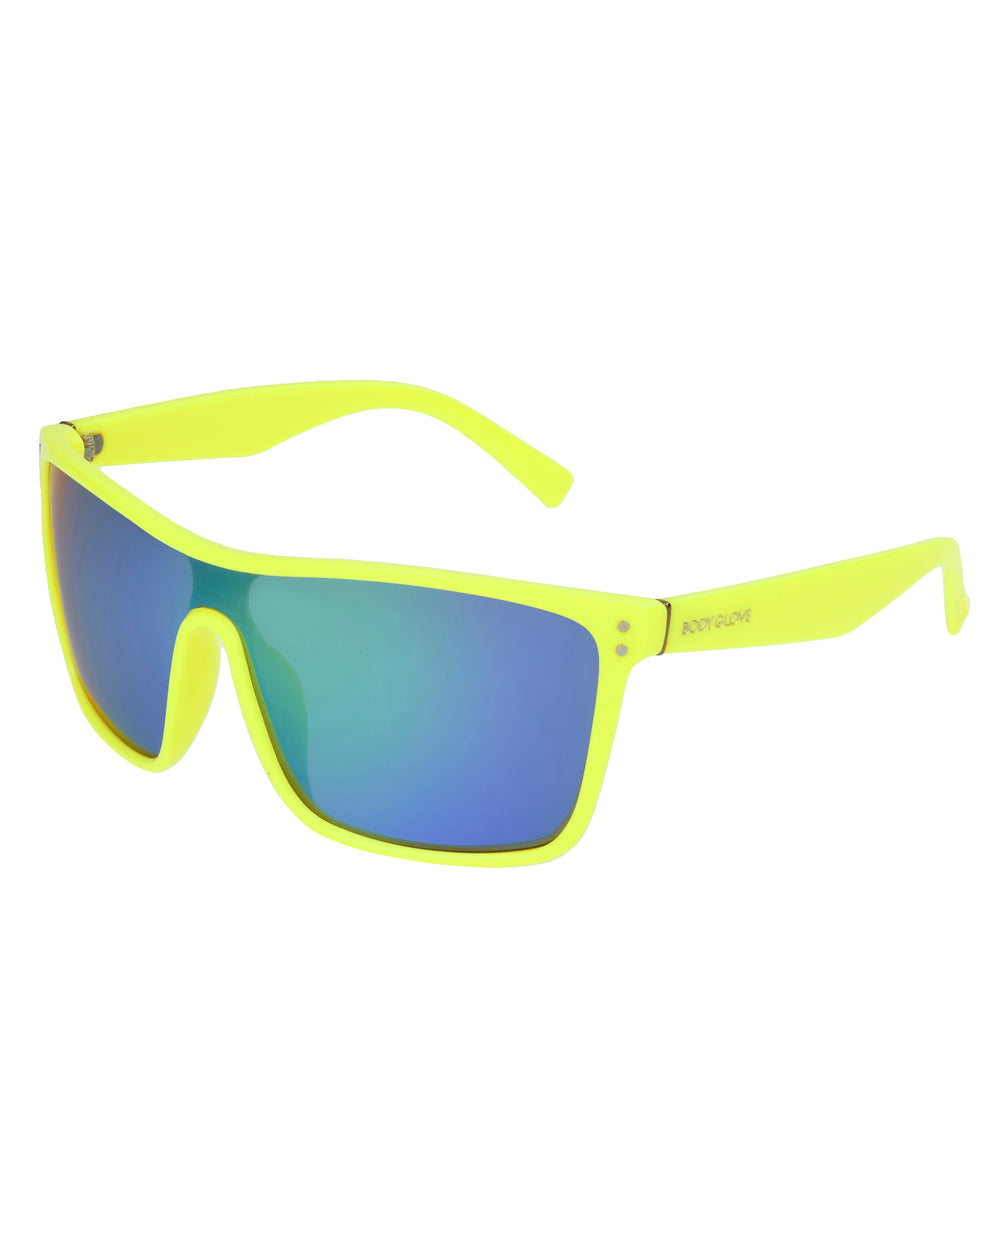 Men's Amped Polarized Sunglasses - Neon Yellow - Body Glove